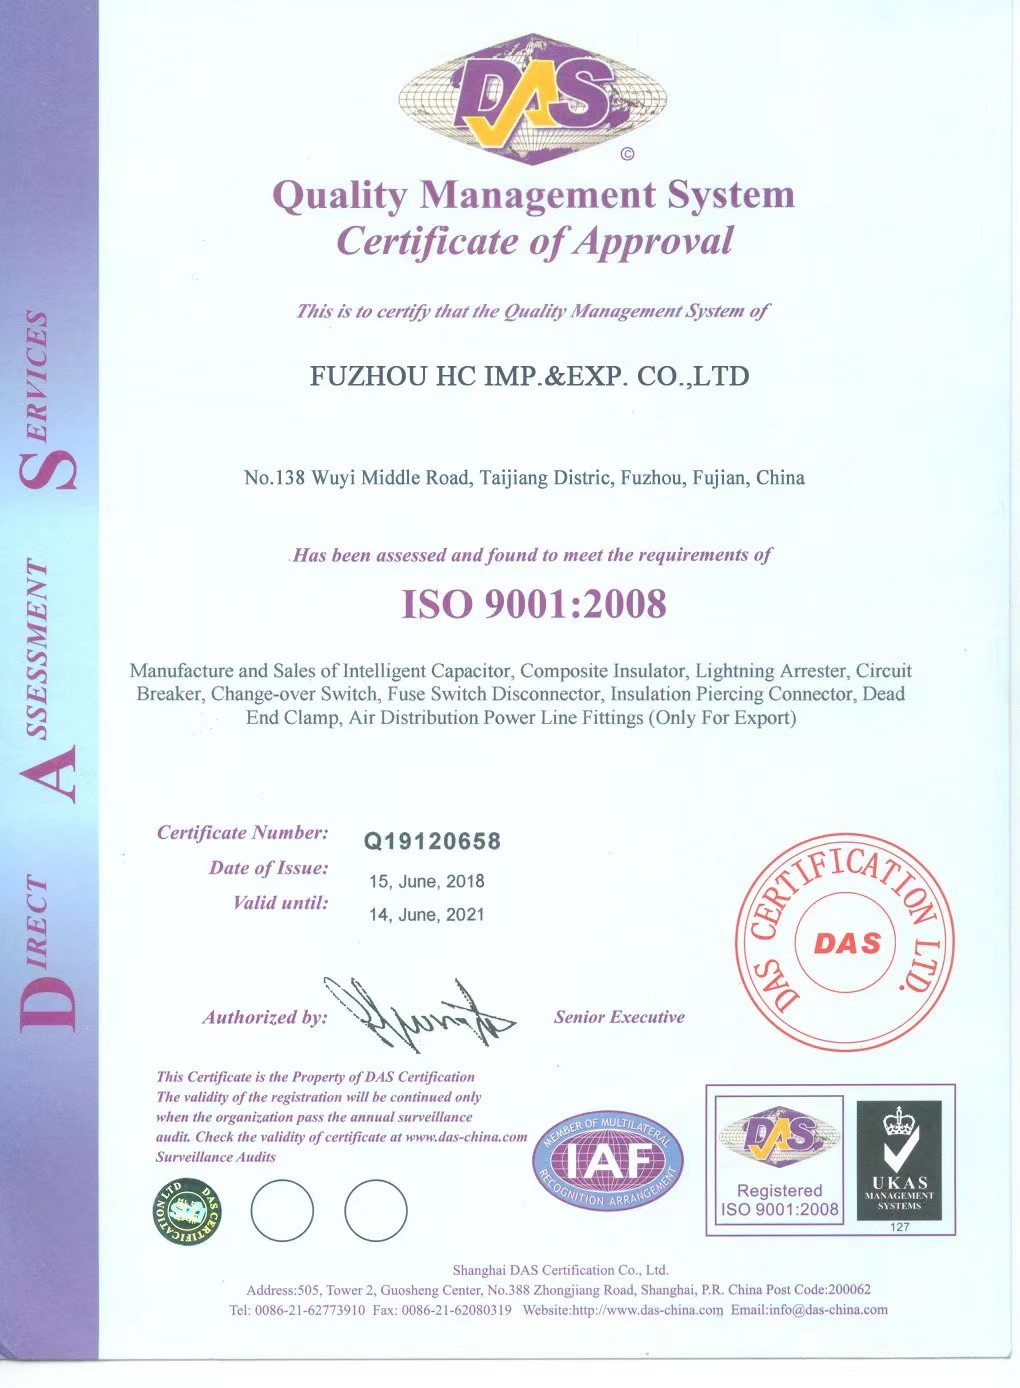 FUZHOU HC IMPORT AND EXPORT CO.,LTD Certifications